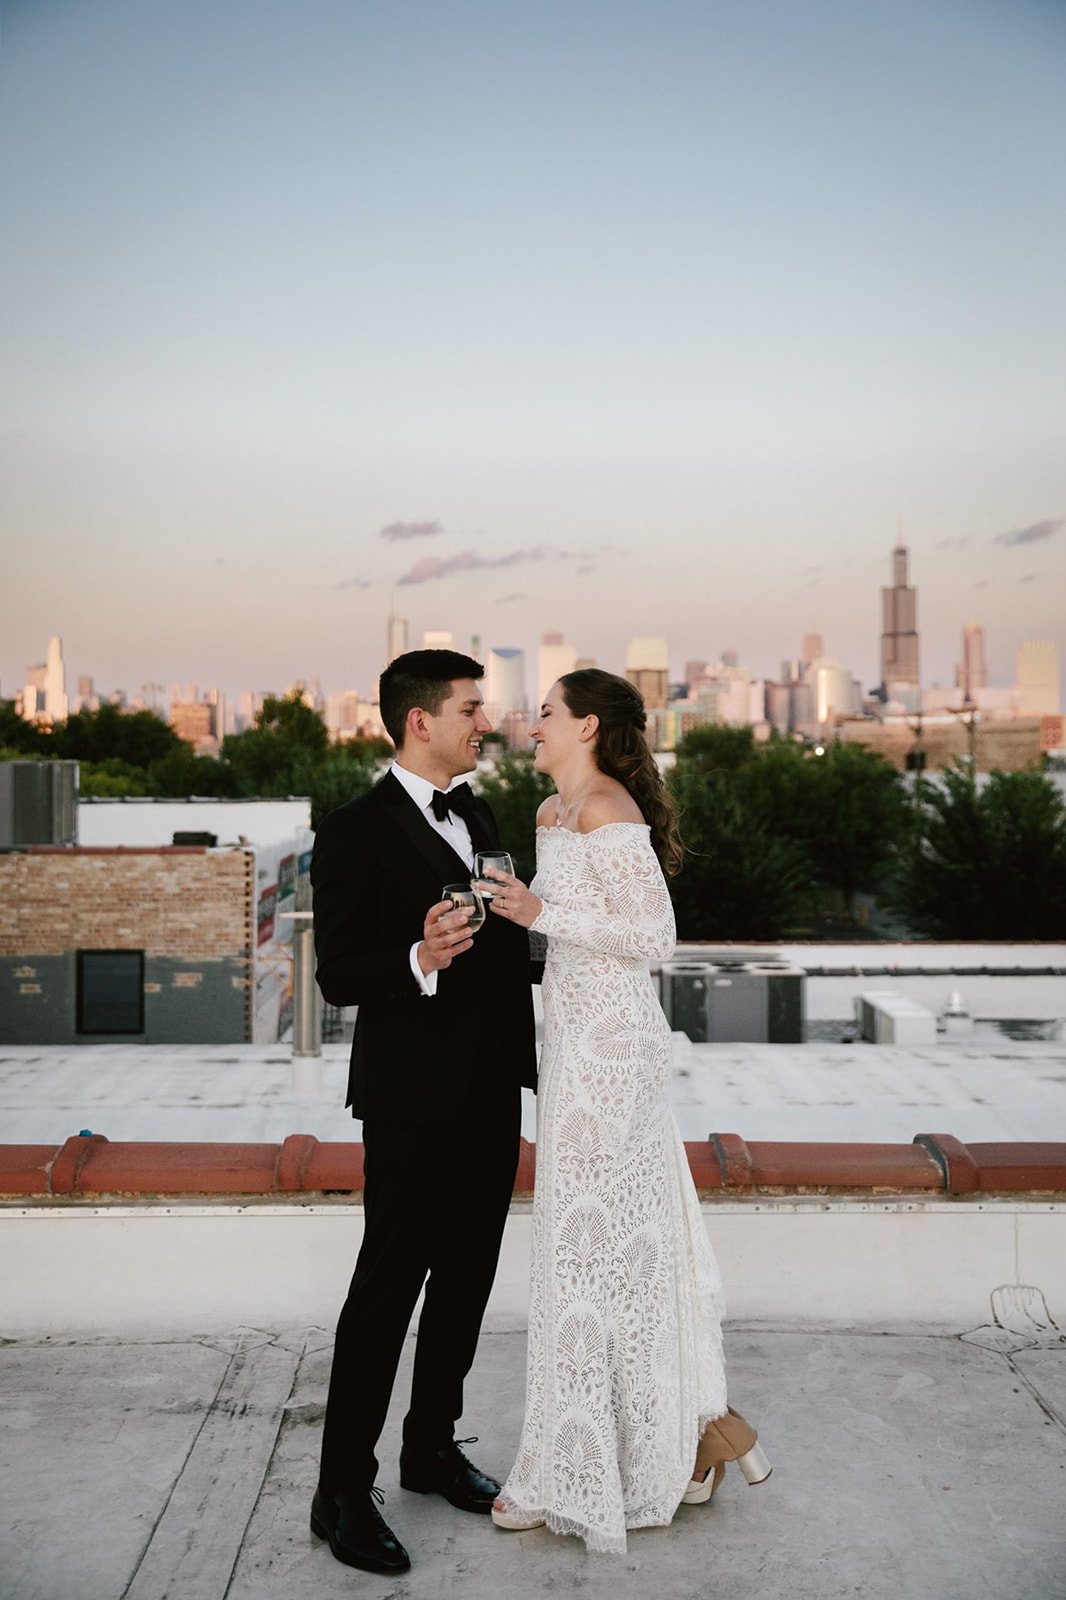 Urban Elegance: Couple enjoying champagne on Walden Chicago rooftop at sunset.